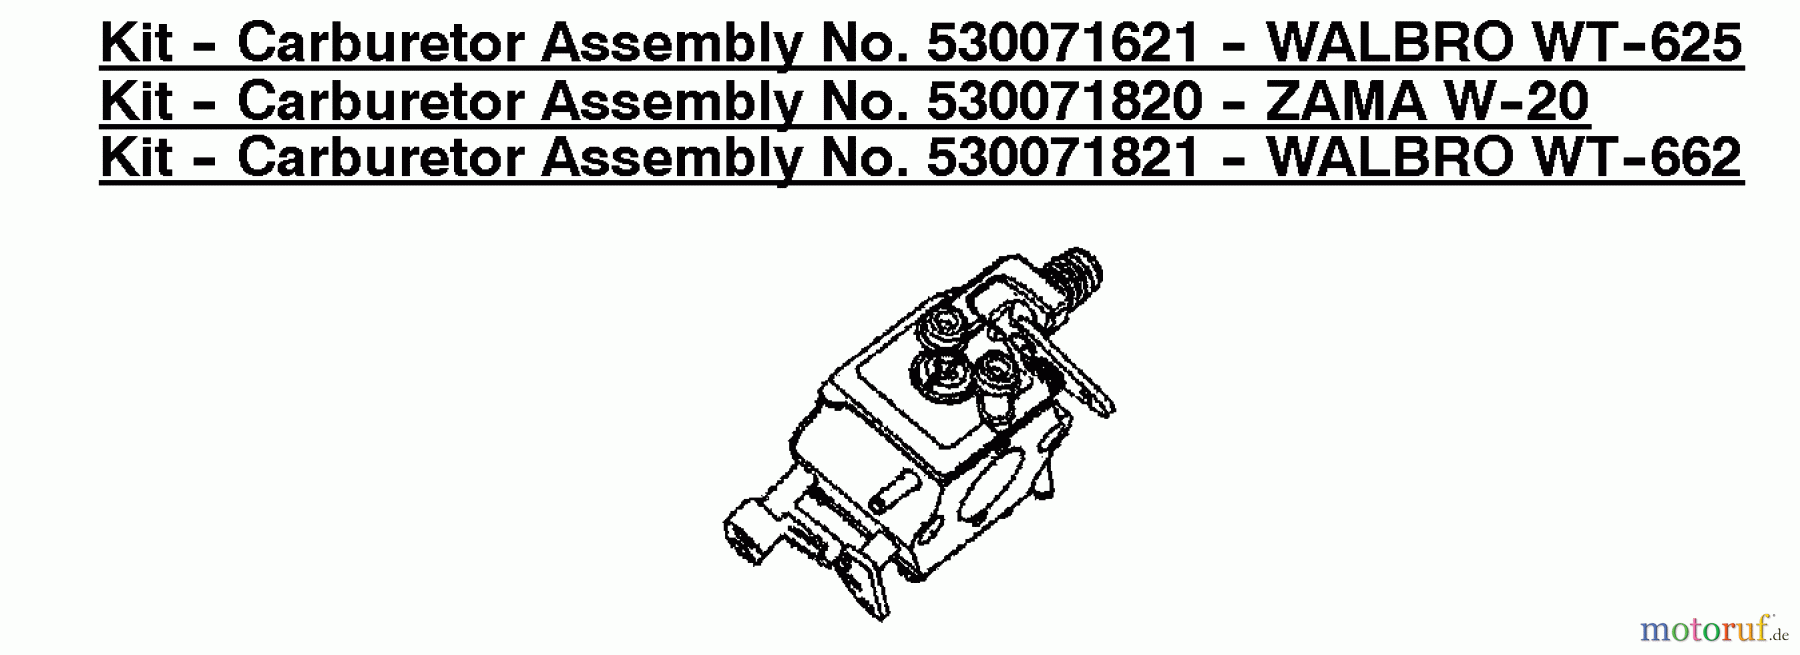  Poulan / Weed Eater Motorsägen PP260 (Type 5) - Poulan Pro Chainsaw Kit - Carburetor Assembly